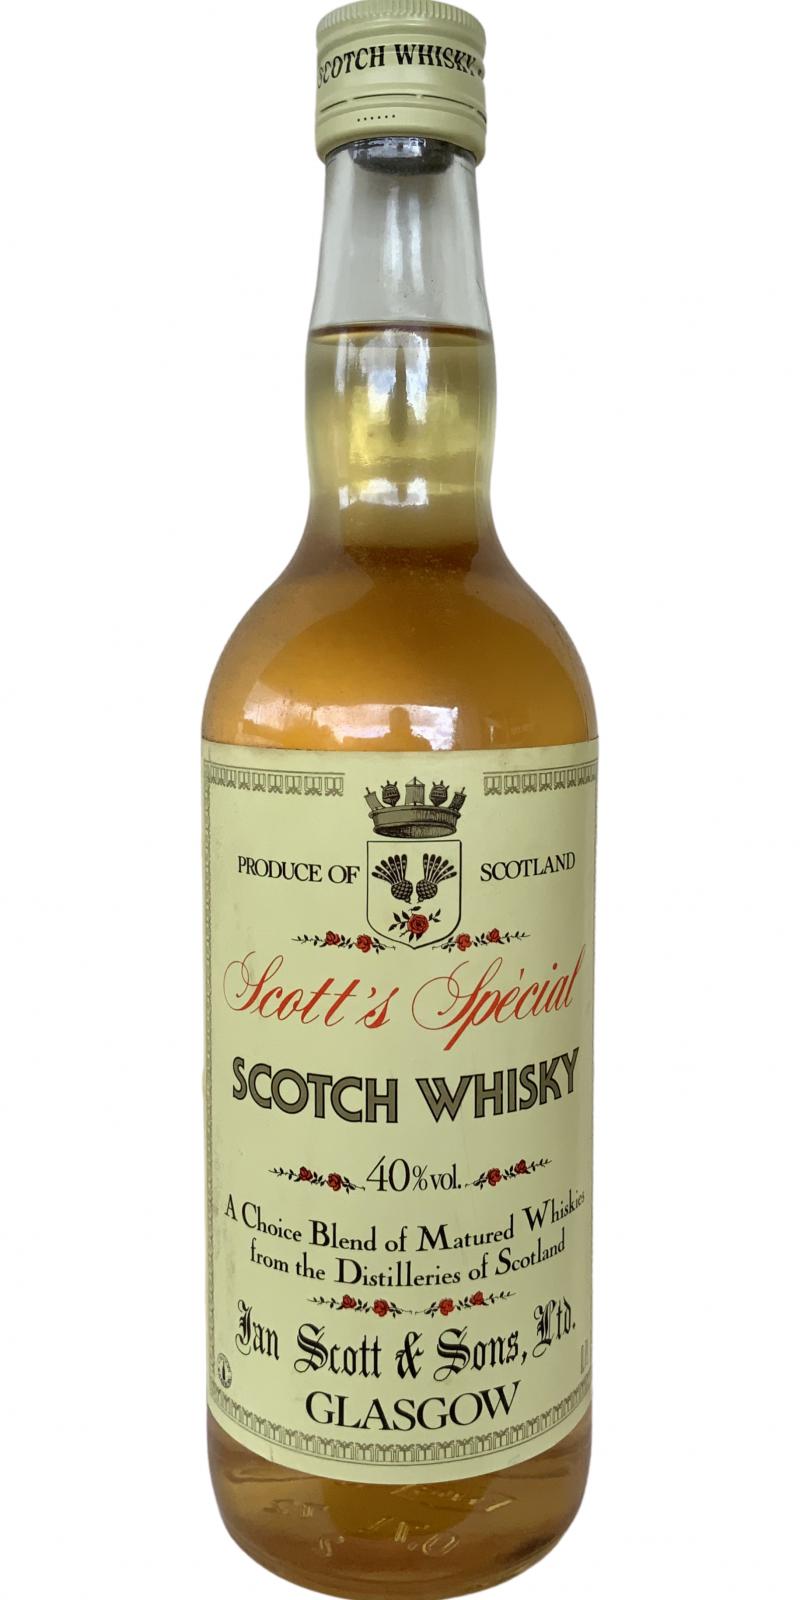 Scott's Special Scotch Whisky